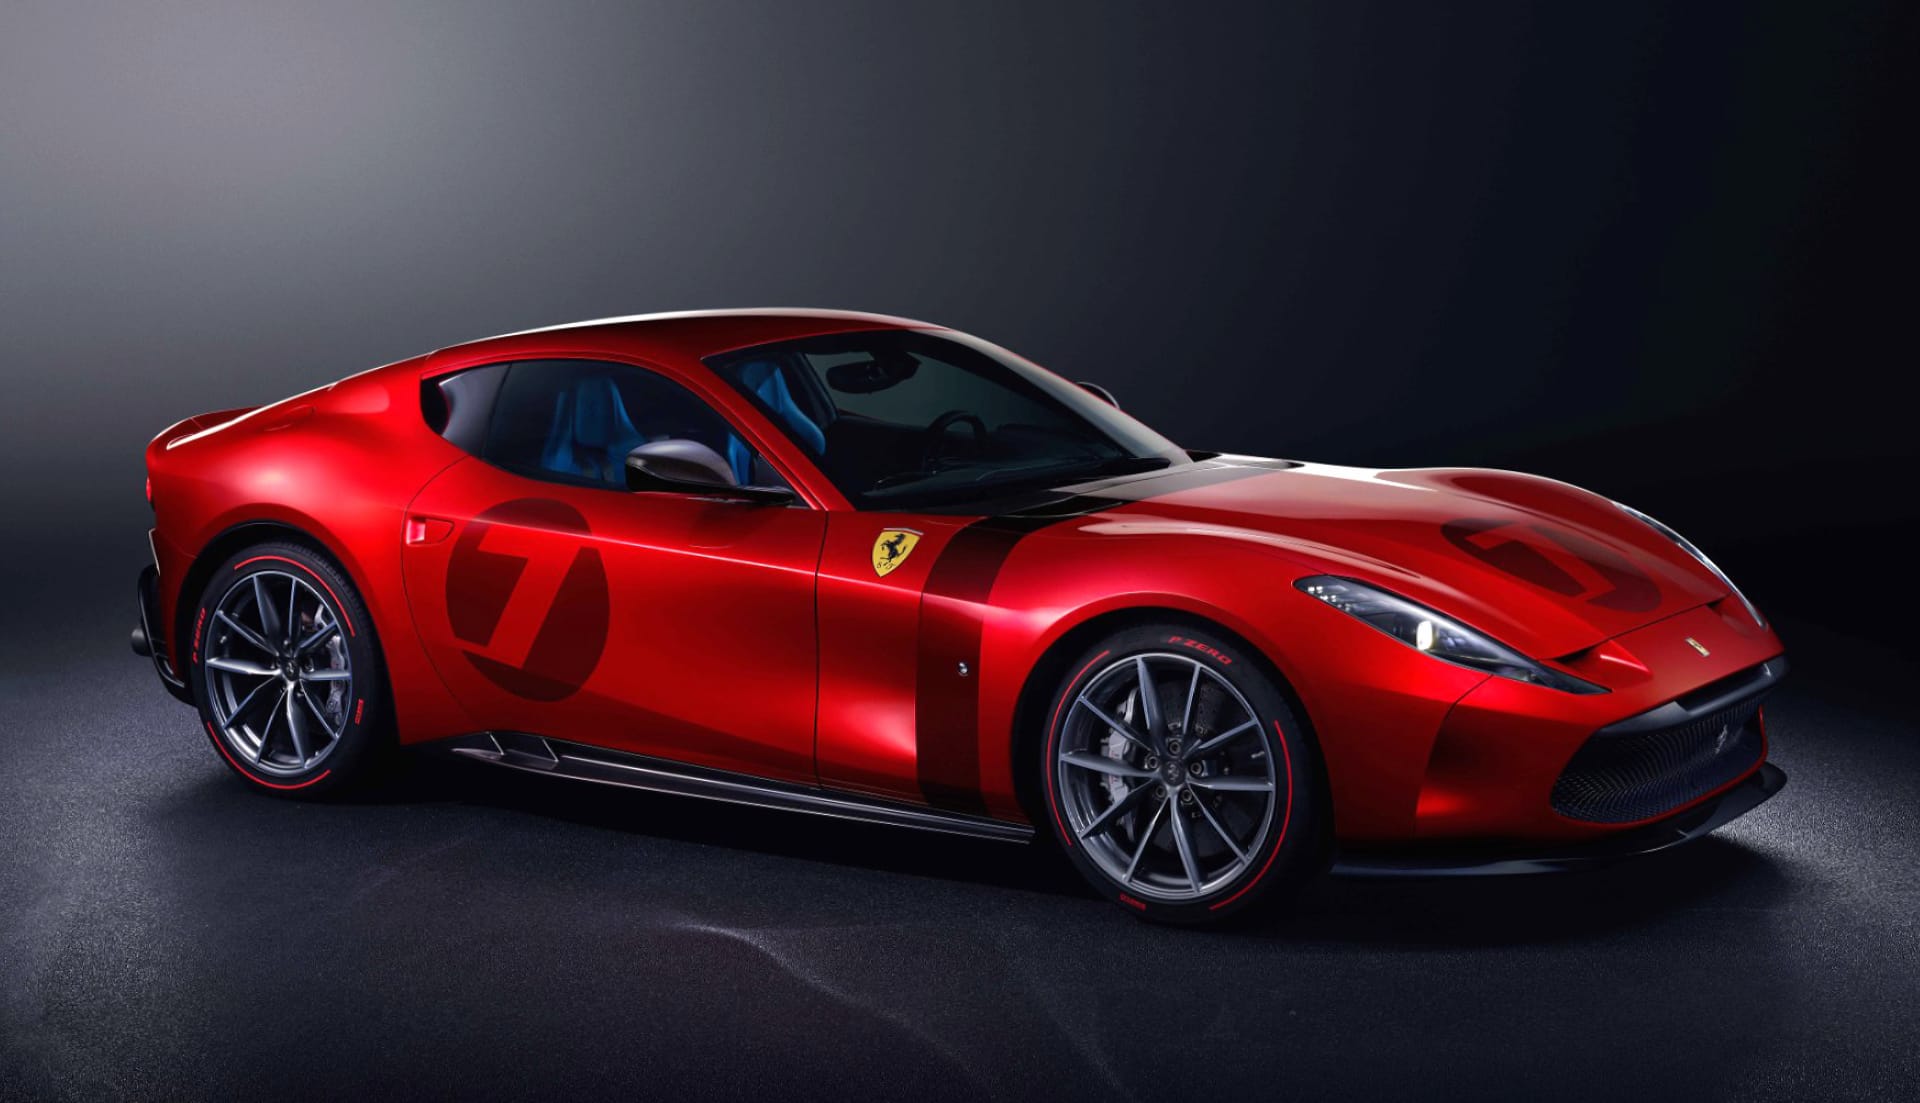 Ferrari Omologata at 640 x 960 iPhone 4 size wallpapers HD quality